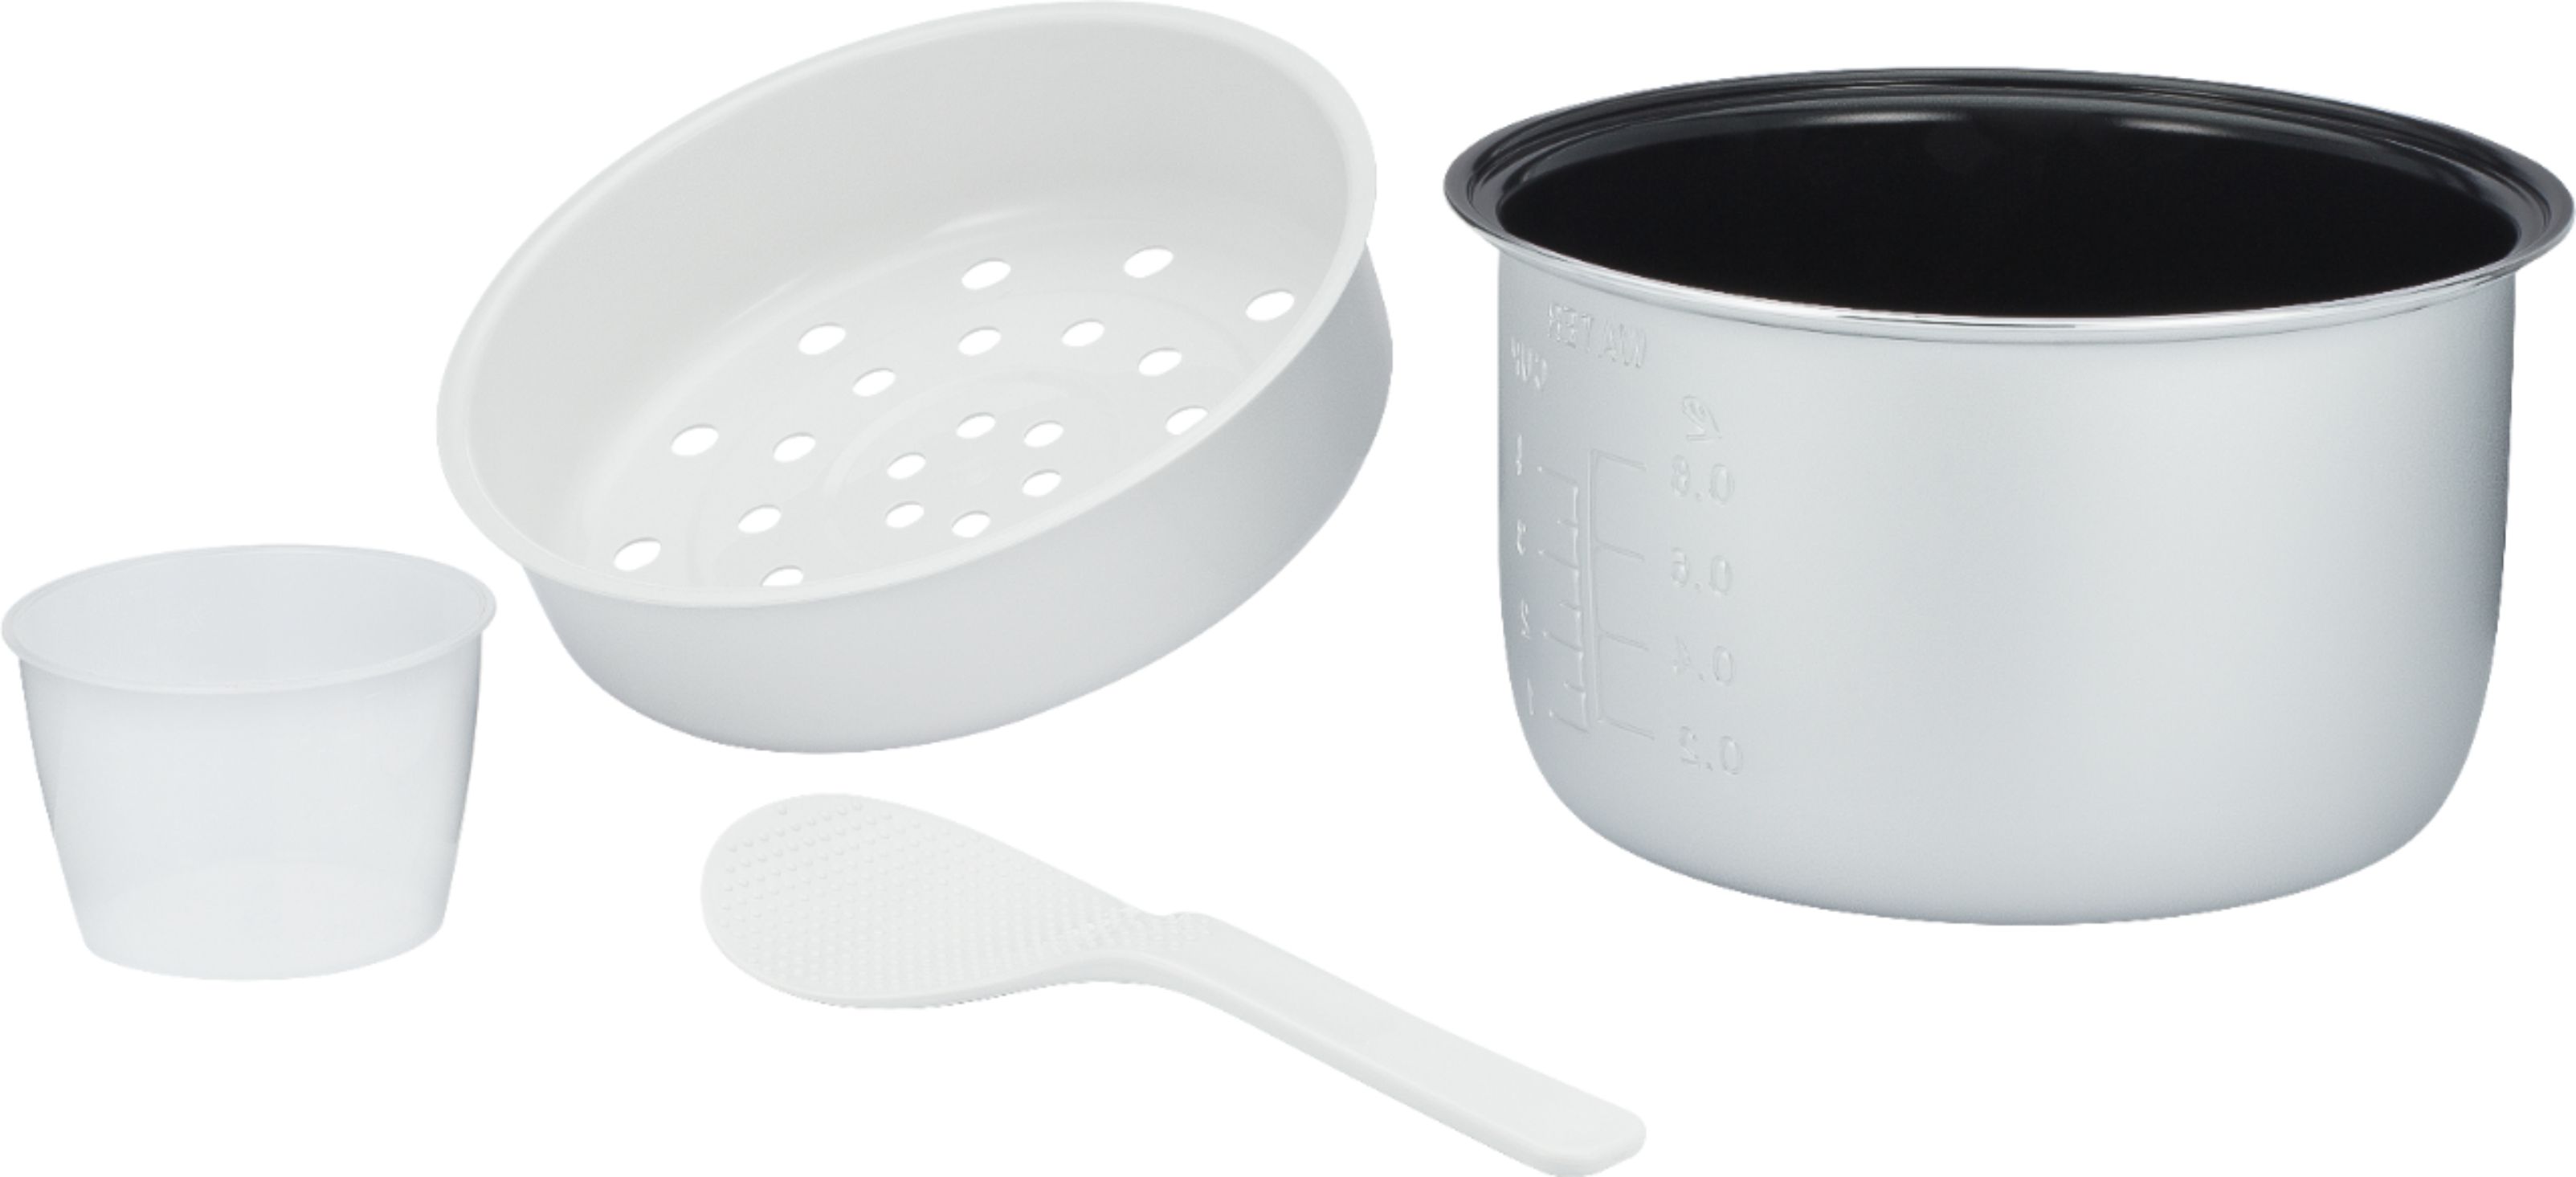 Instant Pot Instant 20-cup Multigrain Cooker White 140-5003-01